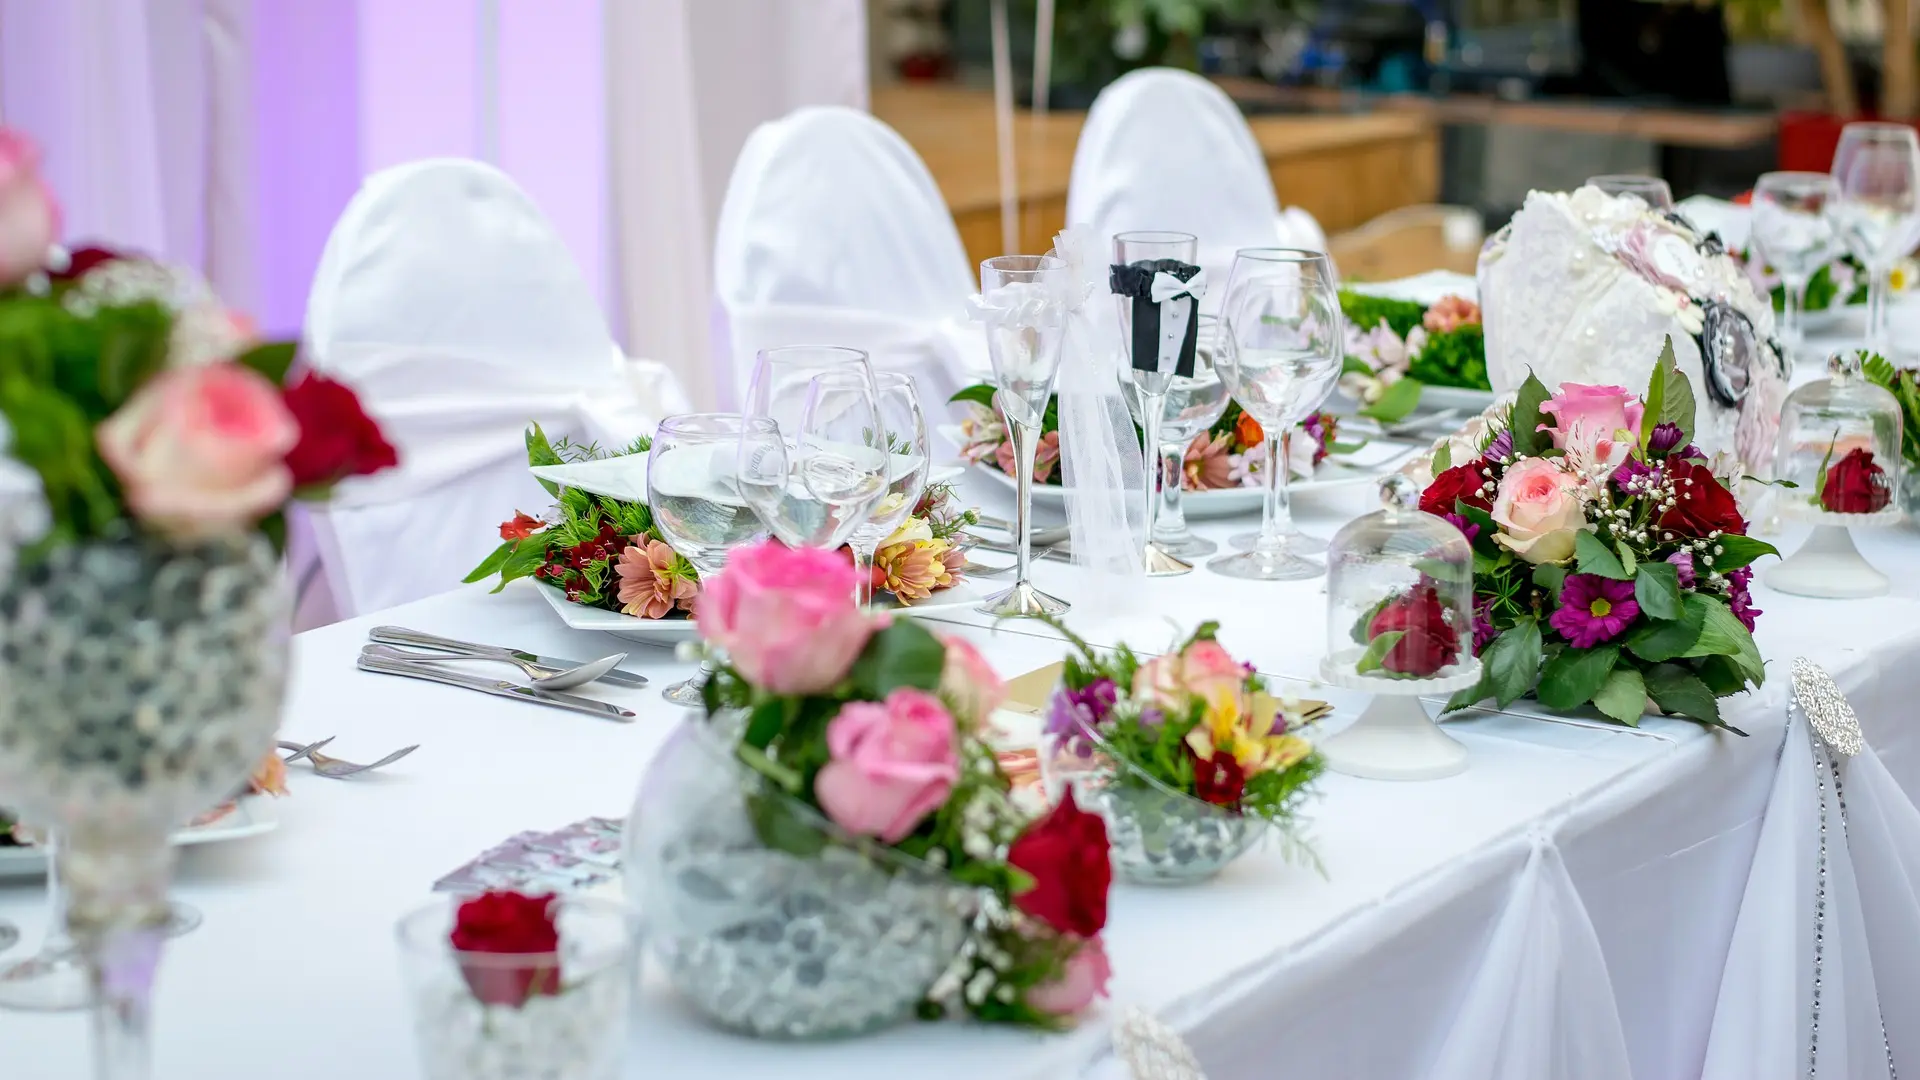 wedding-reception-1284245_1920 svadba venčanje pixabay-6519cf2138170.webp